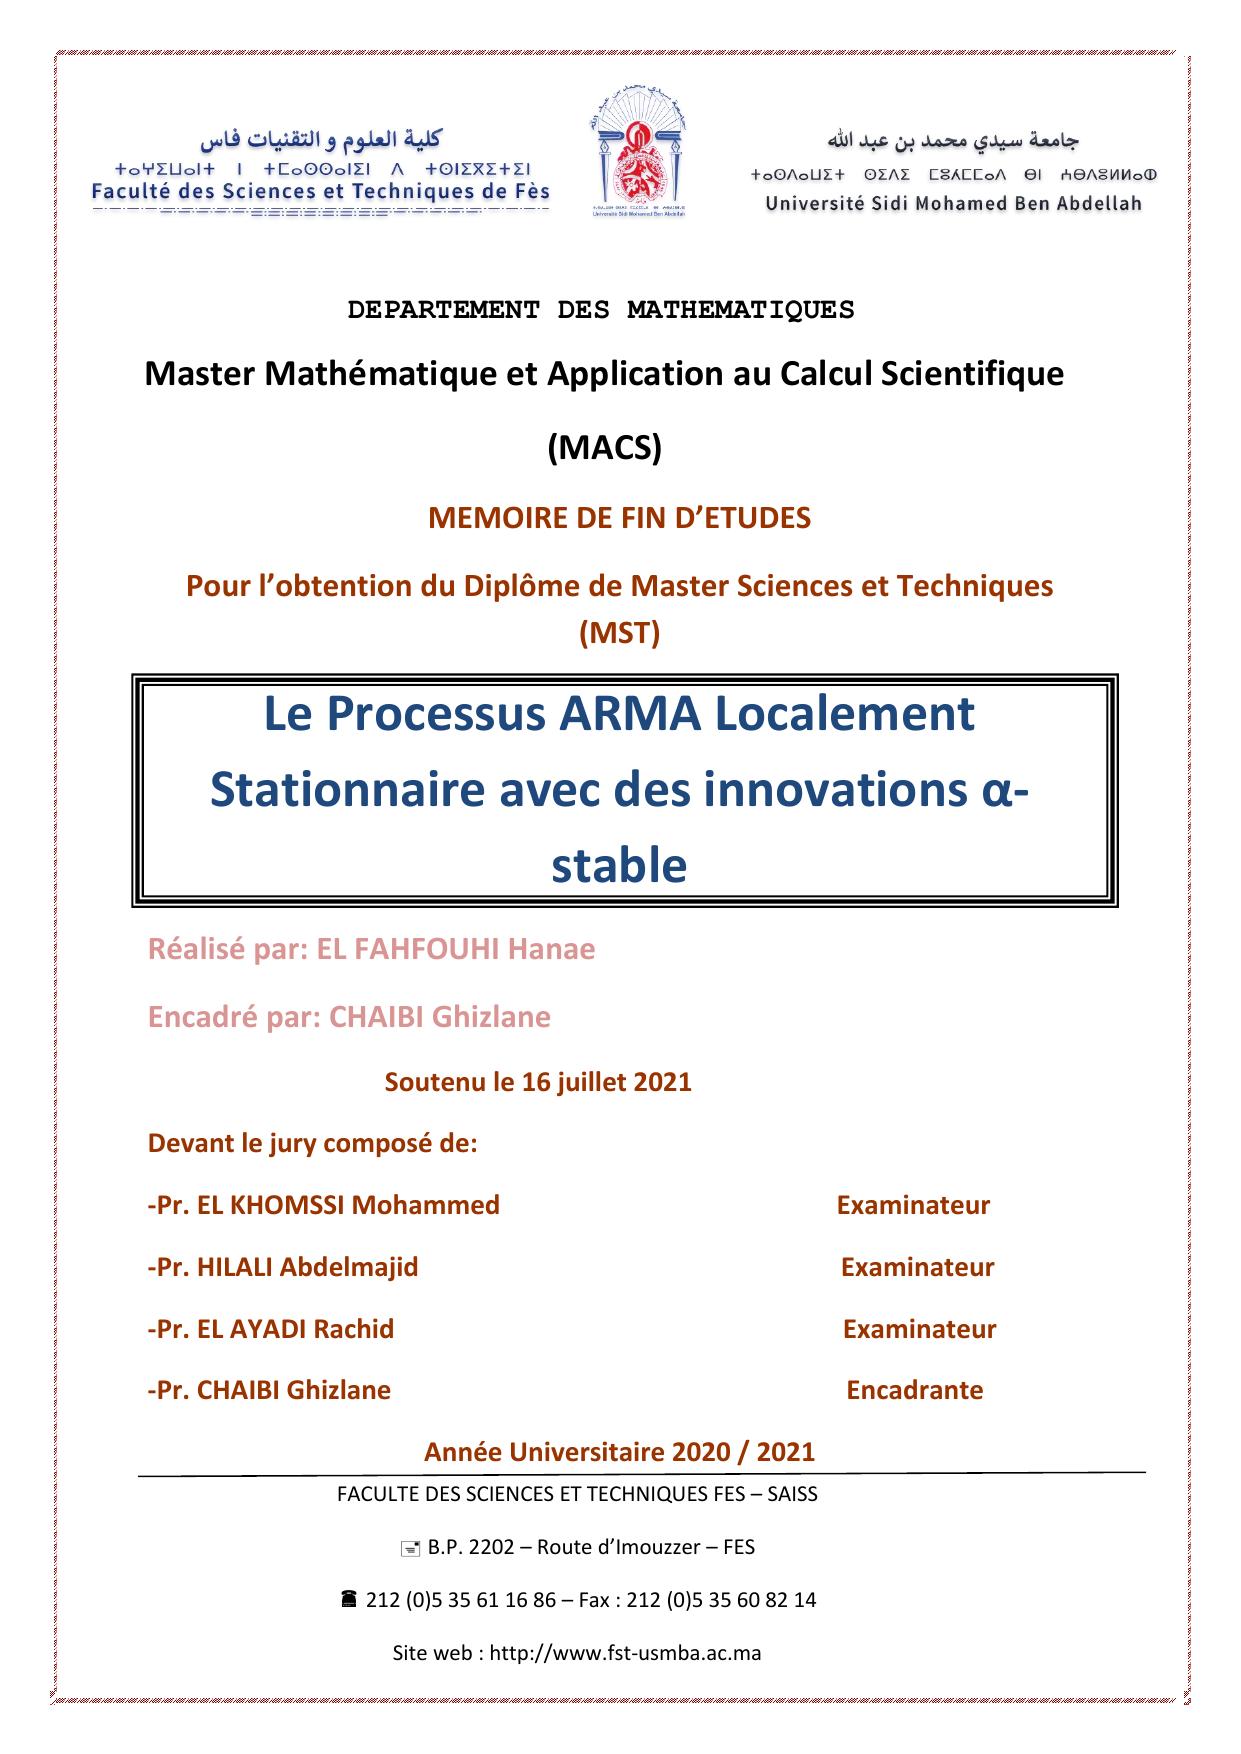 Le Processus ARMA Localement Stationnaire avec des innovations α-stable